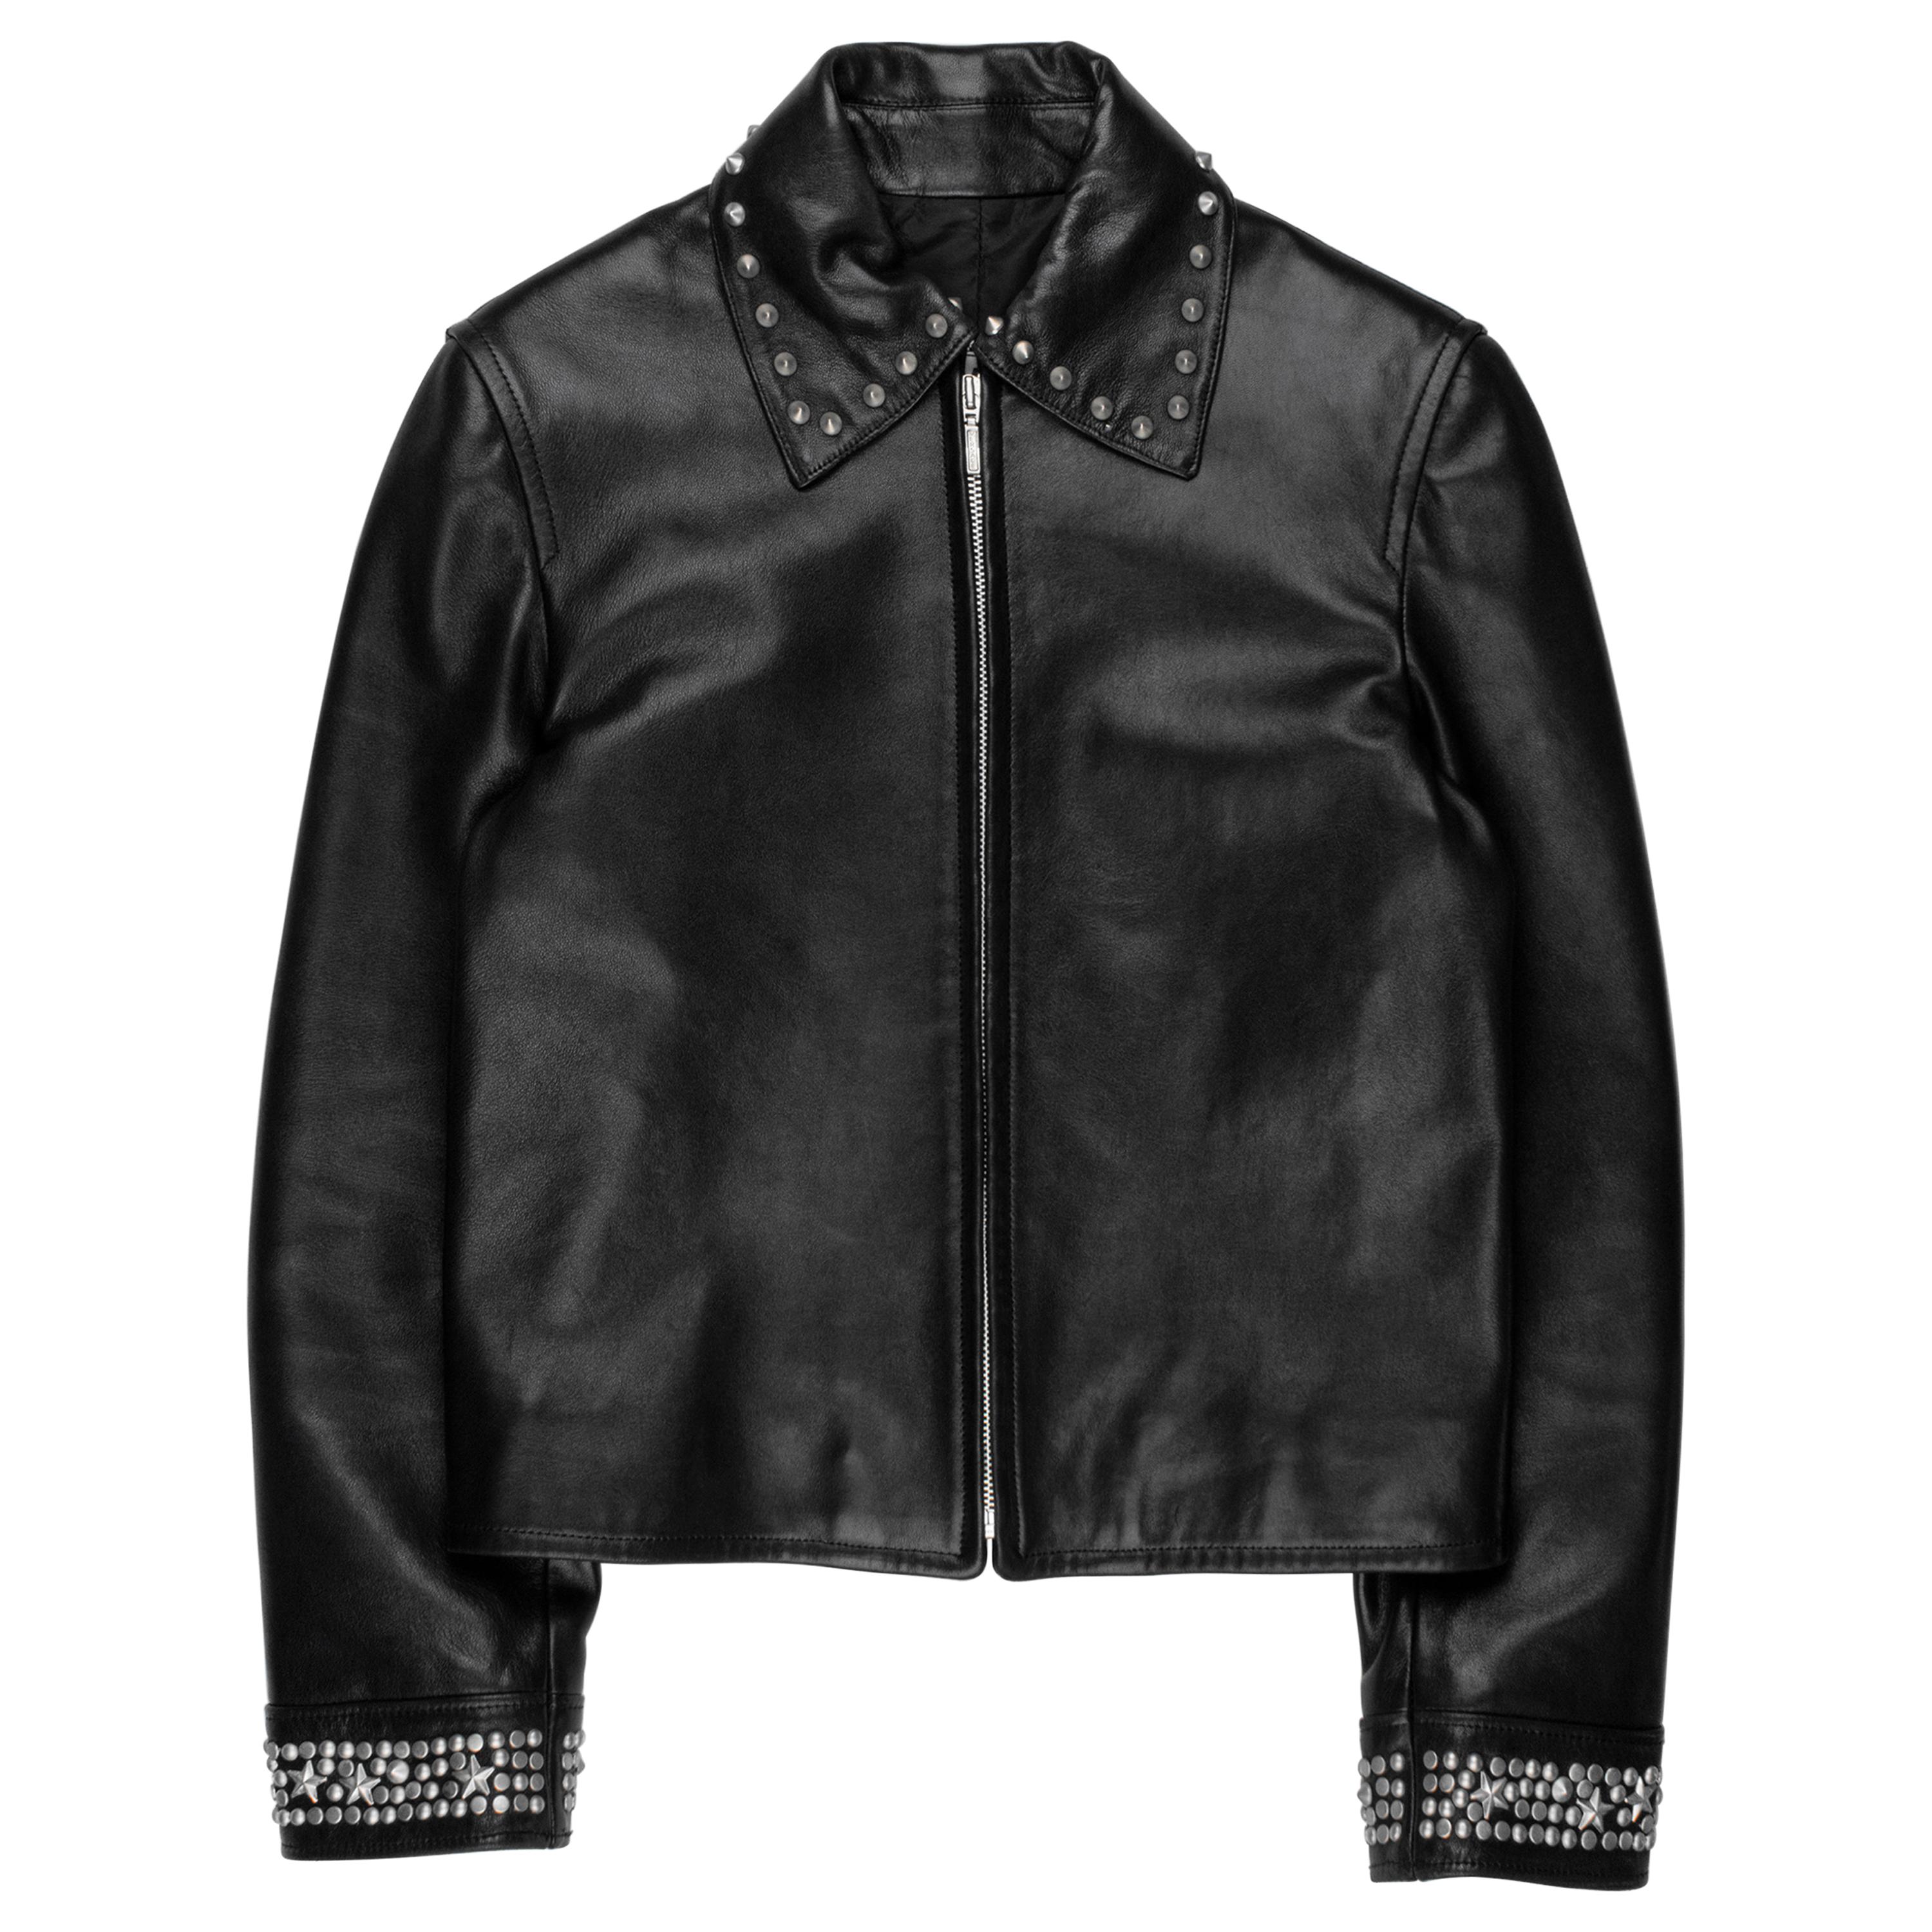 Gianni Versace Studded Leather Jacket